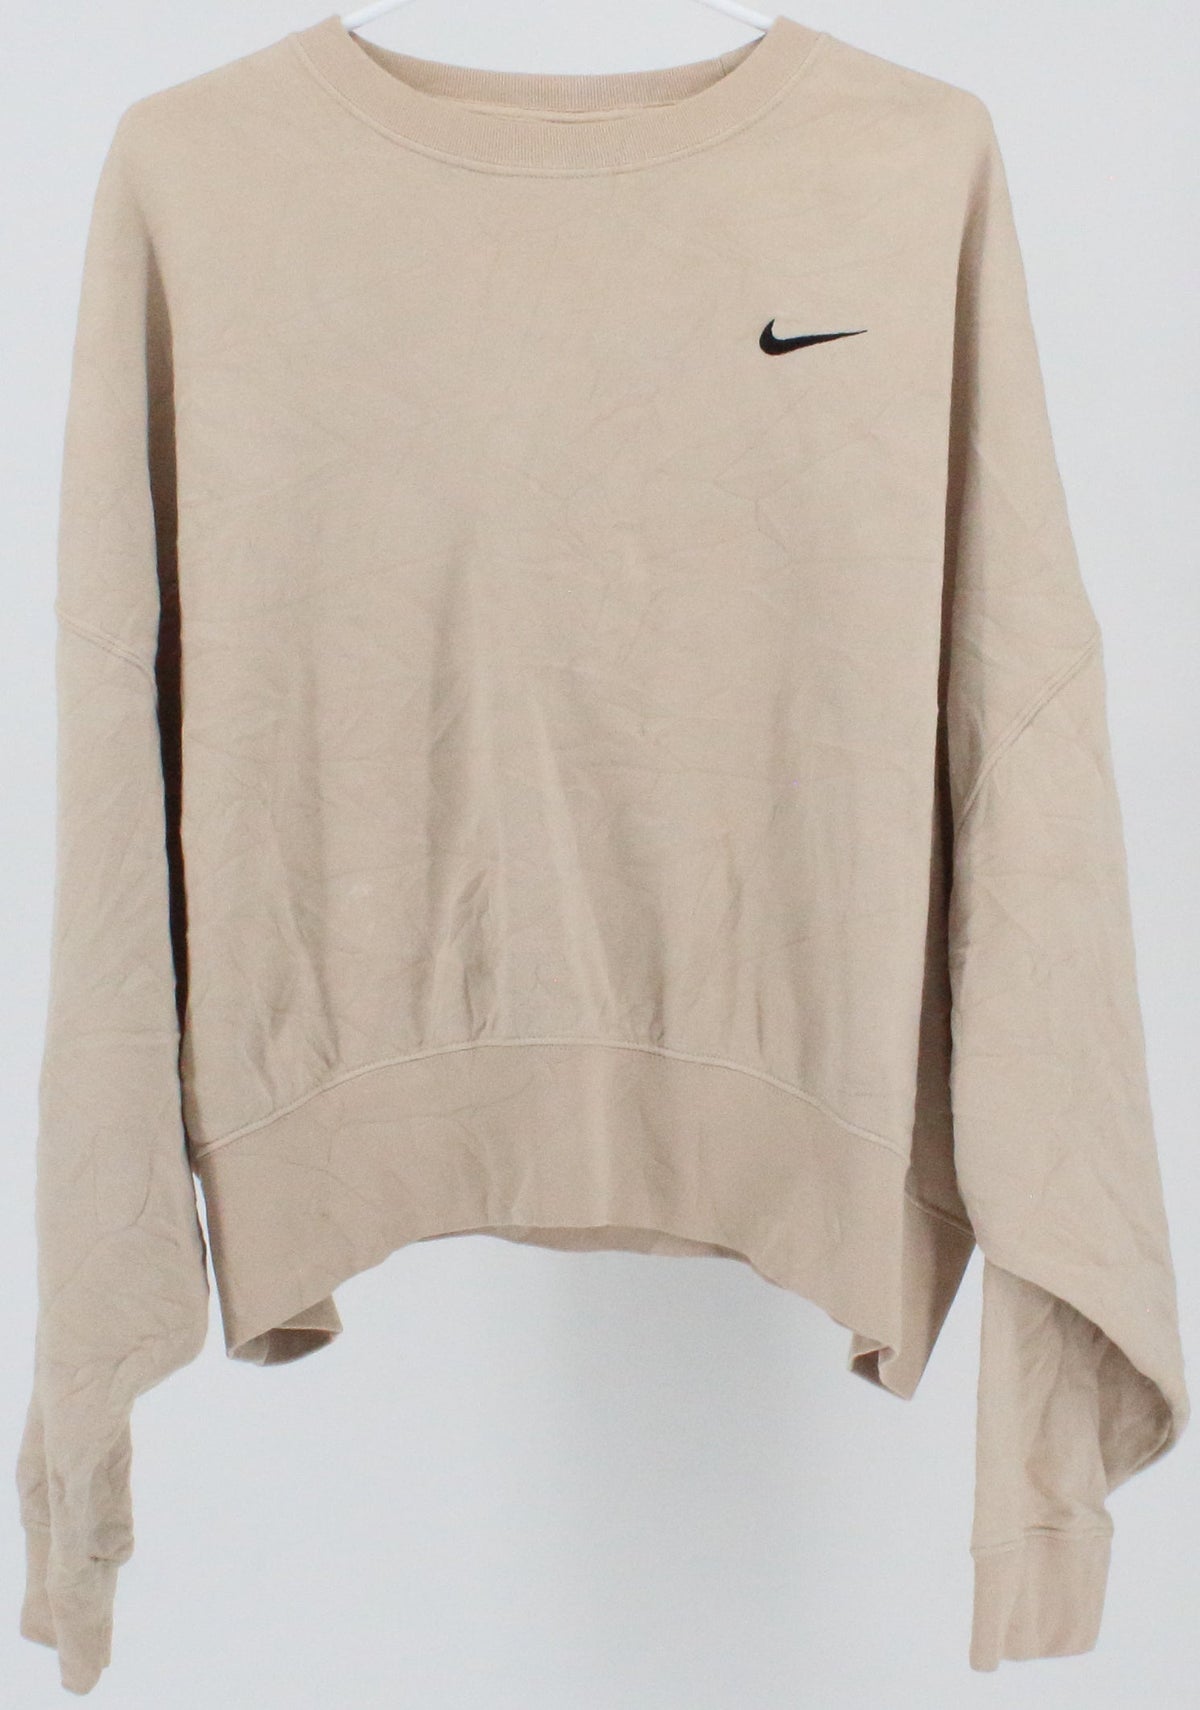 Nike Beige Sweatshirt